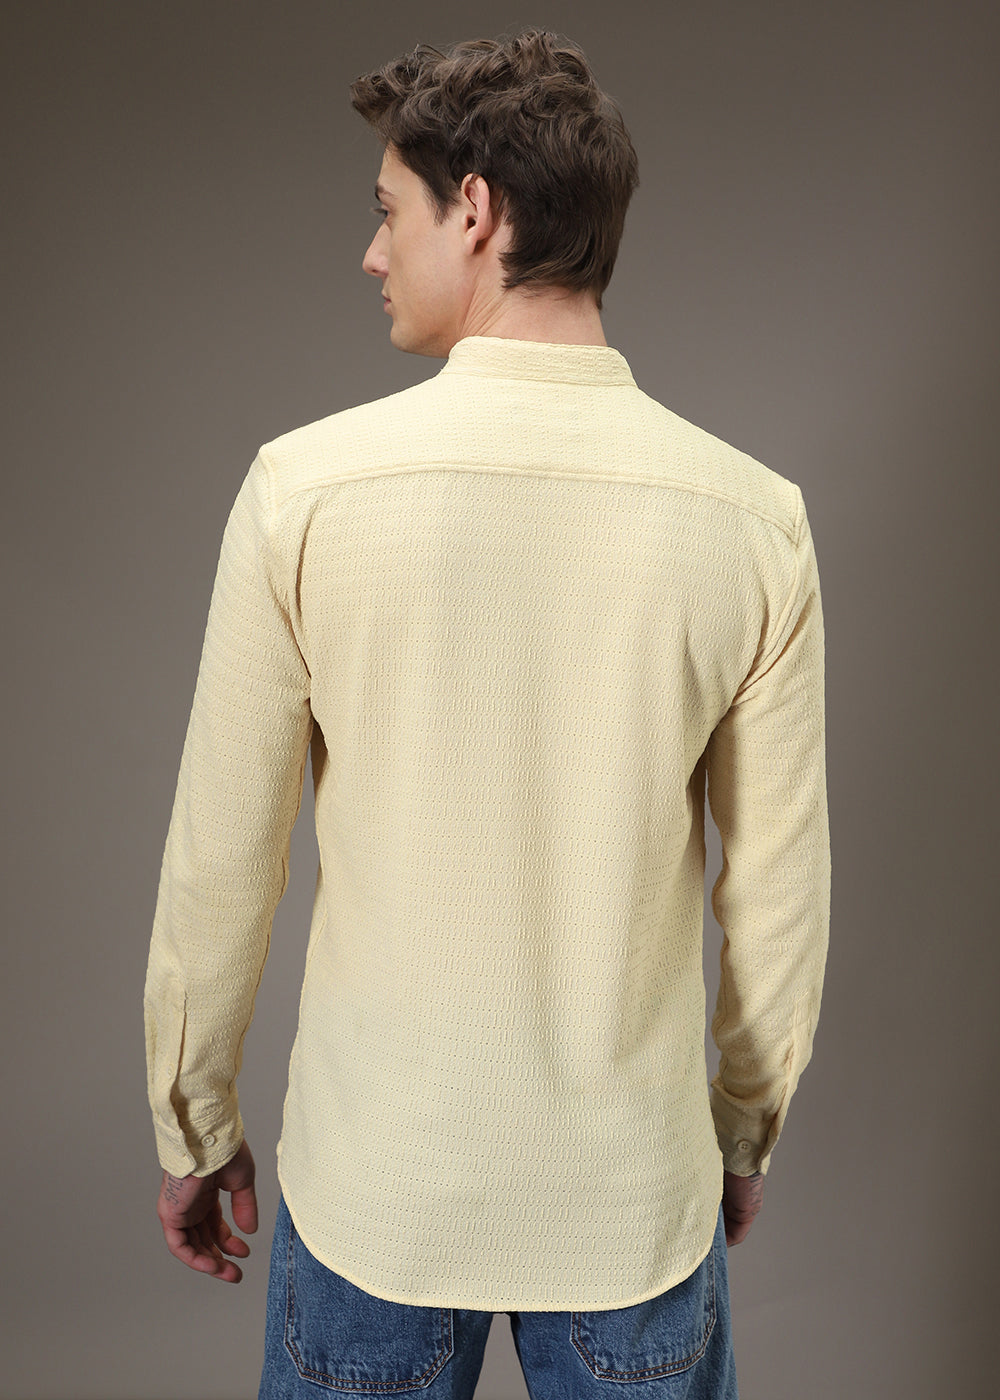 Pastel Yellow Knitted Crochet Shirt